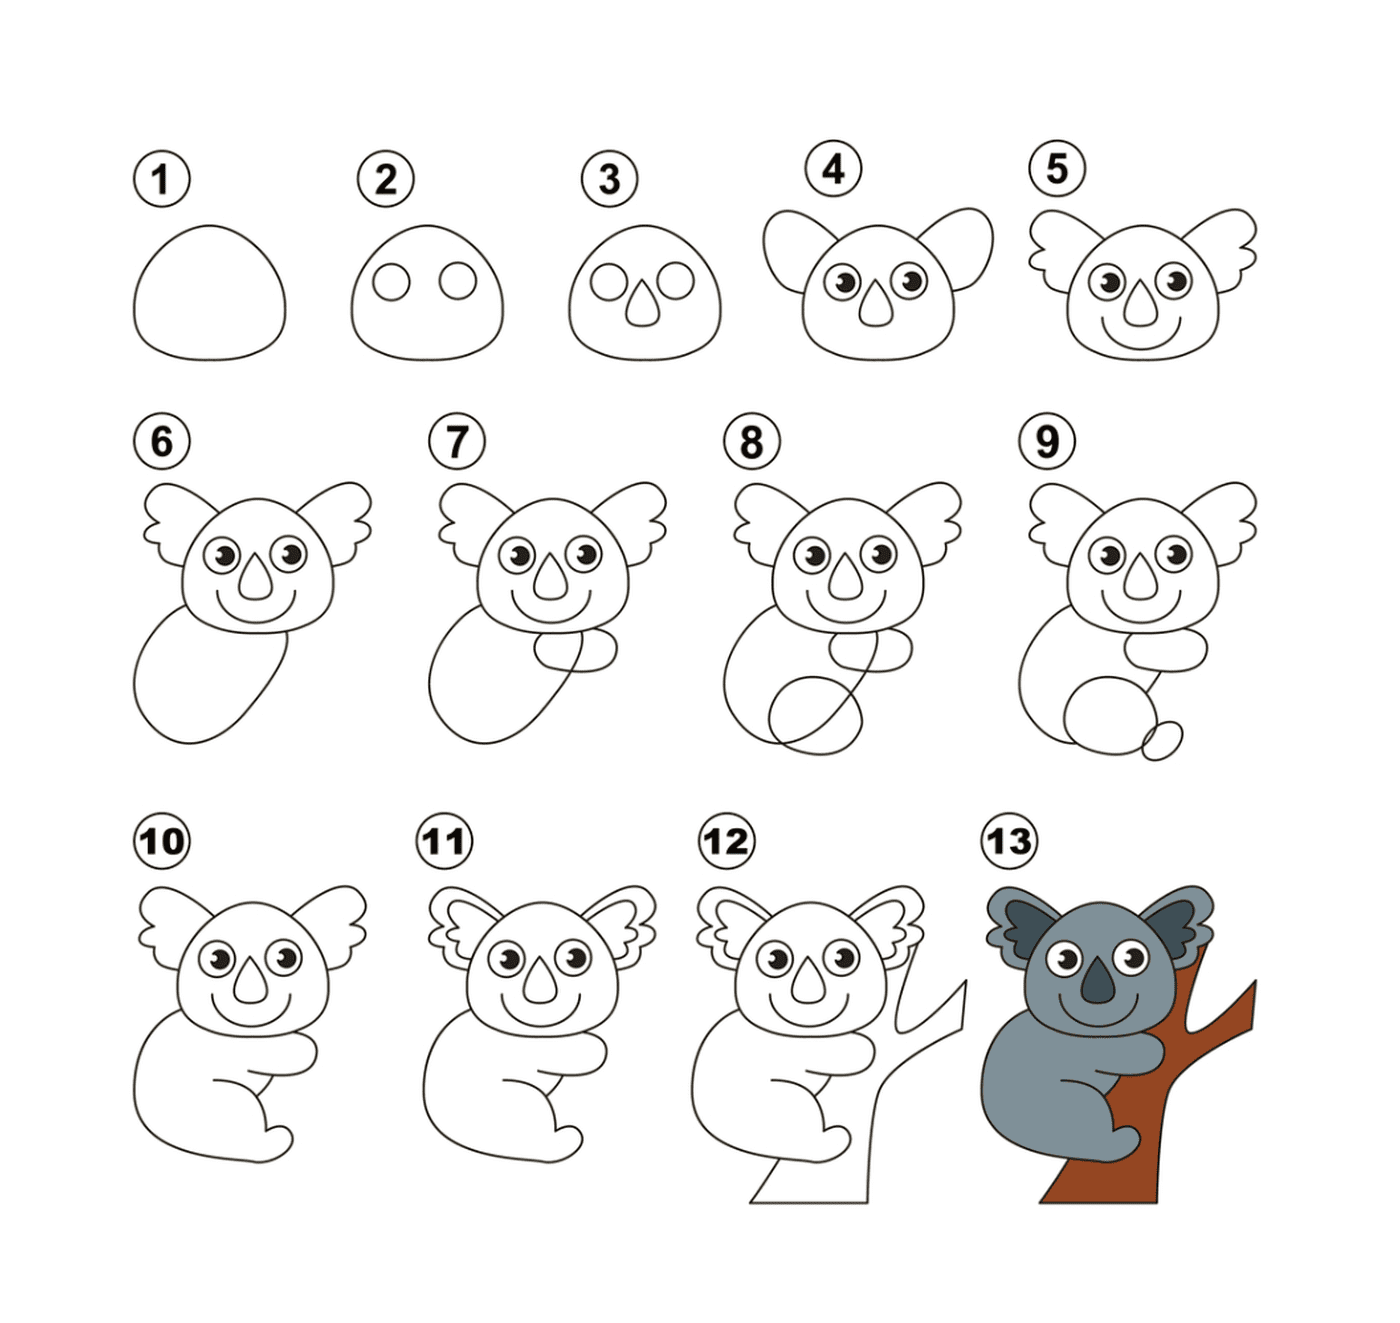  Cómo dibujar un koala fácilmente 